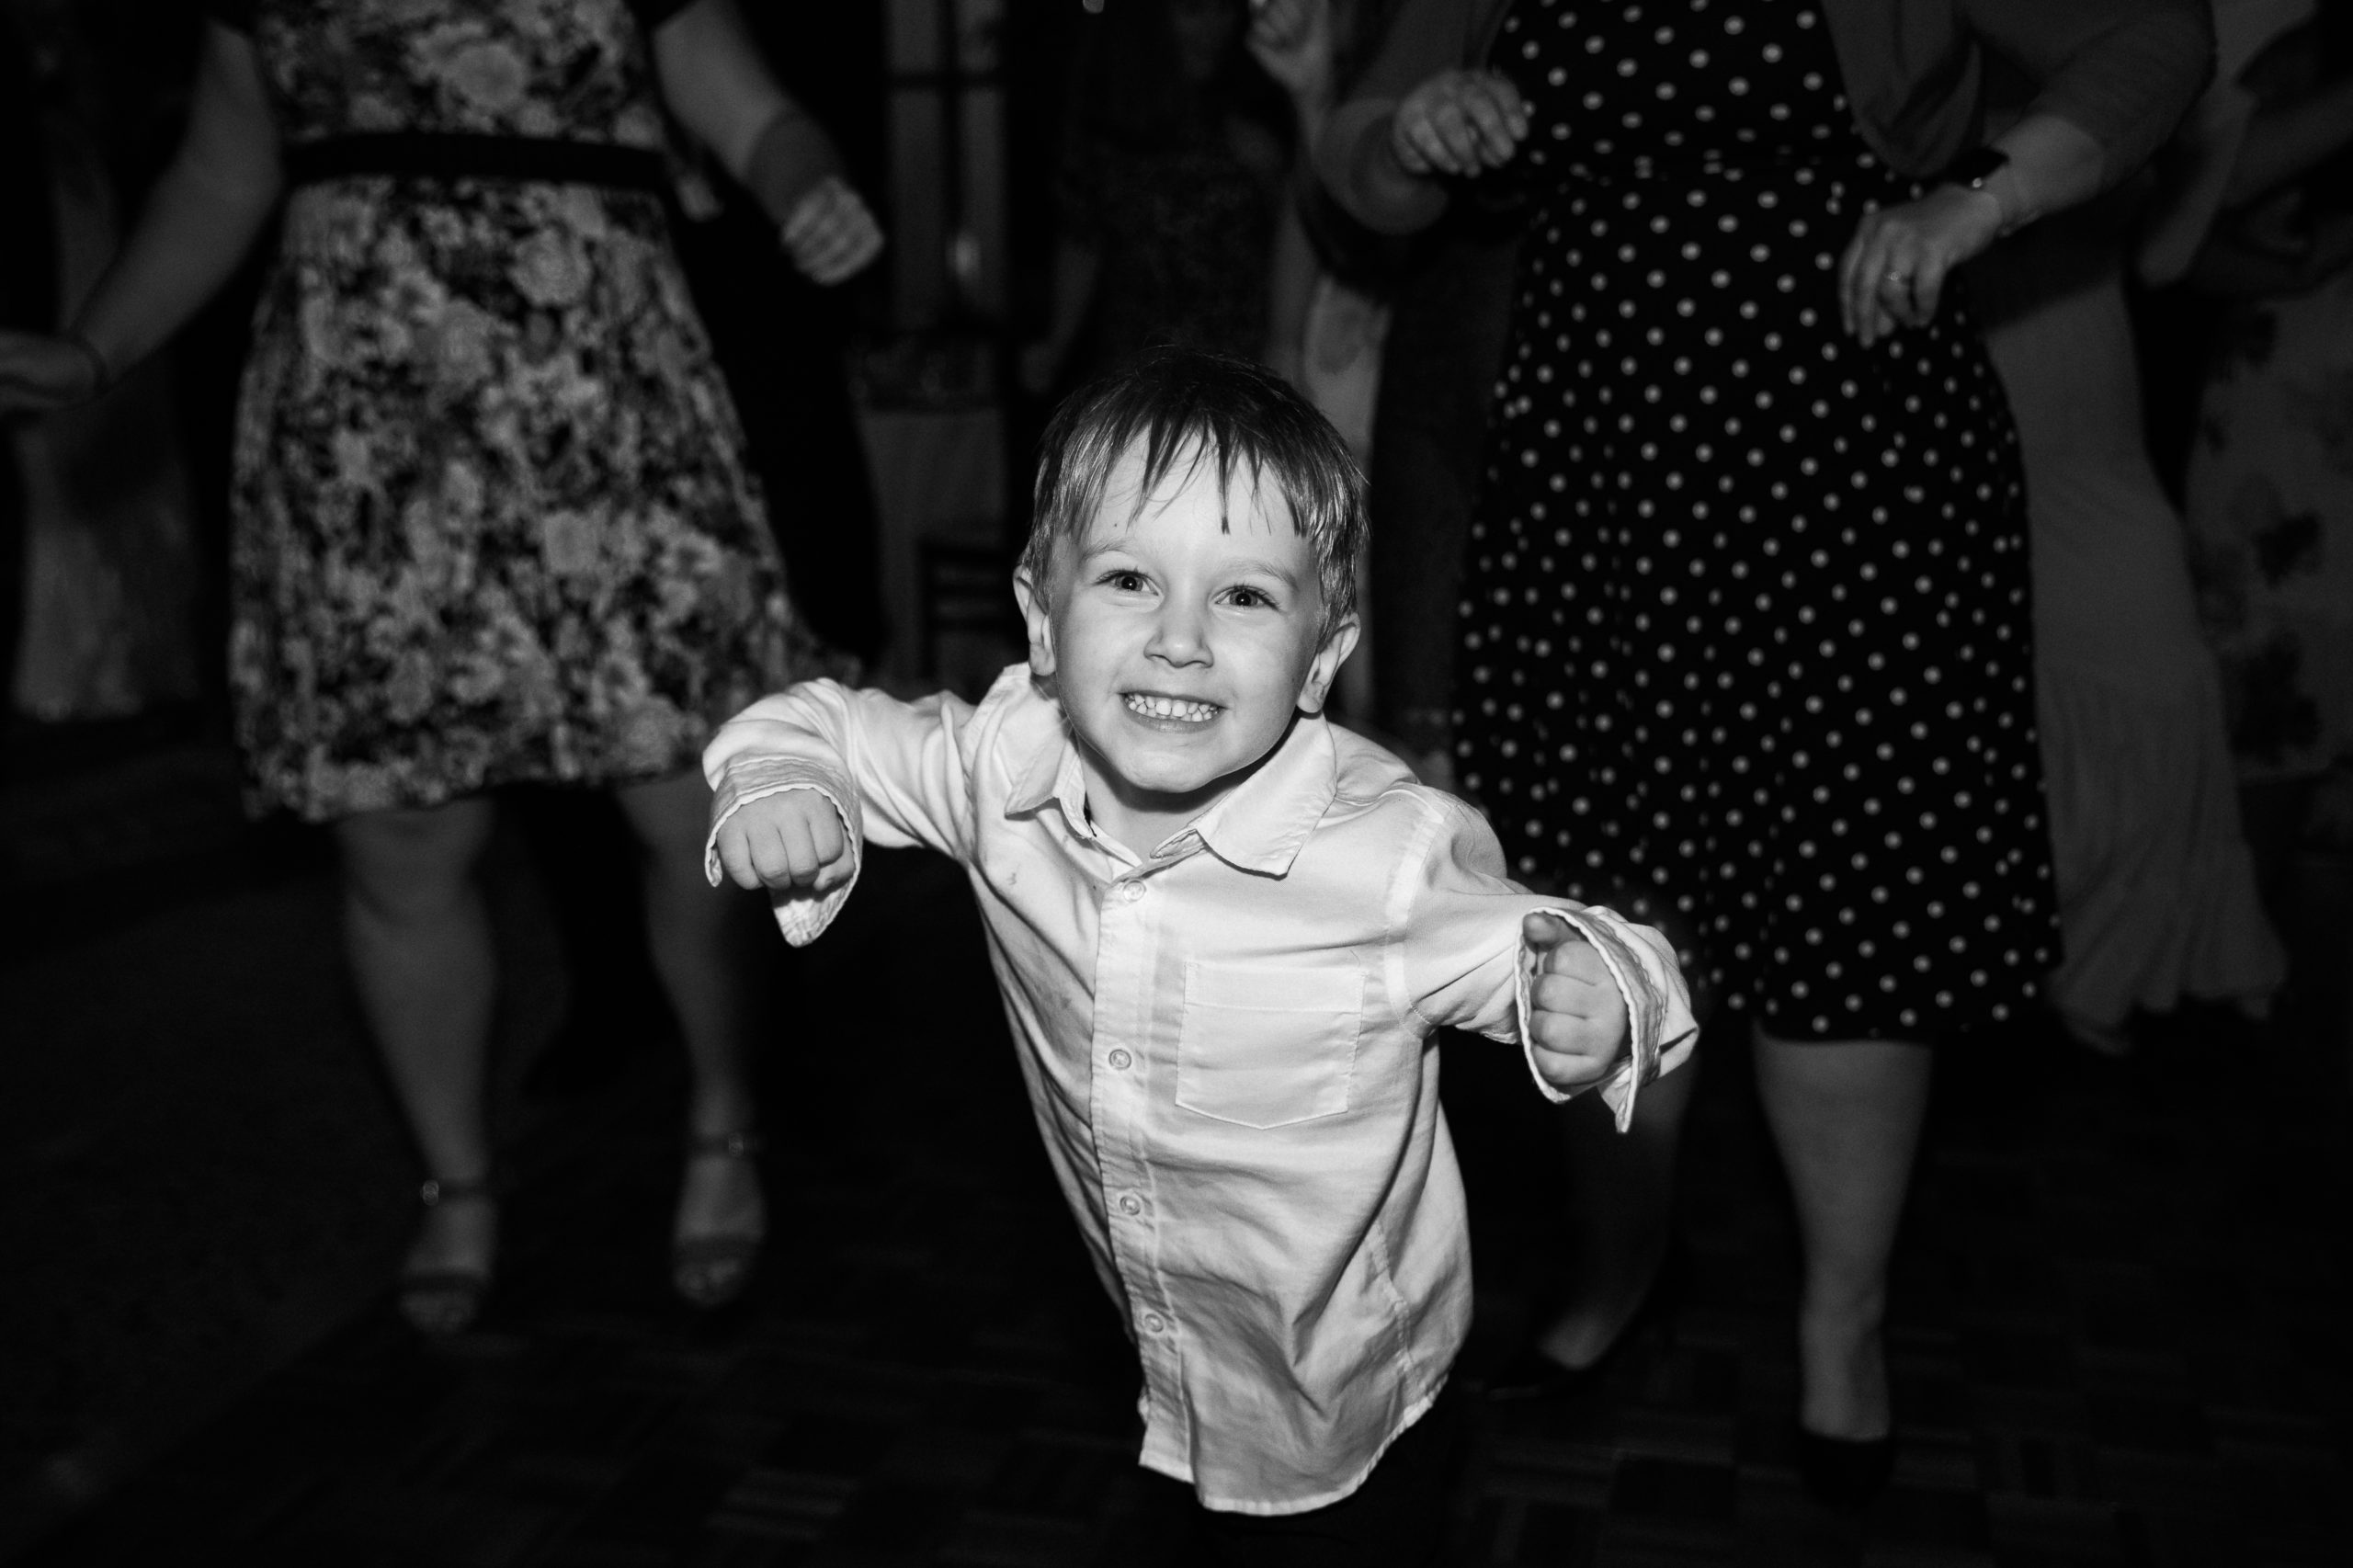 A guest dancing at a wedding reception at the Atrium at Meadowlark Botanical Gardens